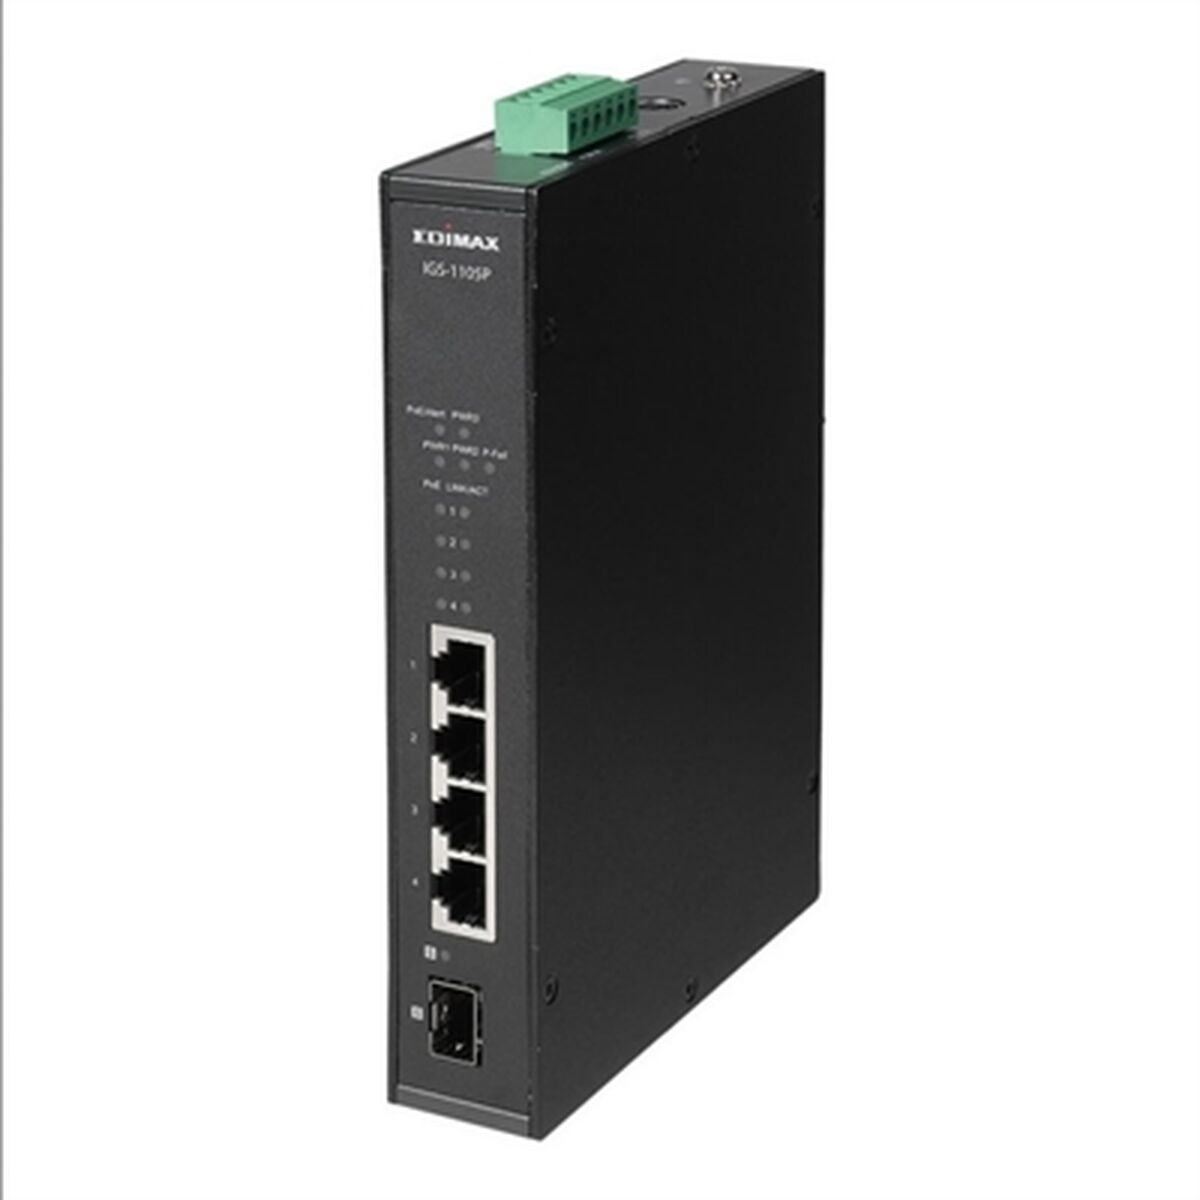 IGS-1005P EDIMAX Switch